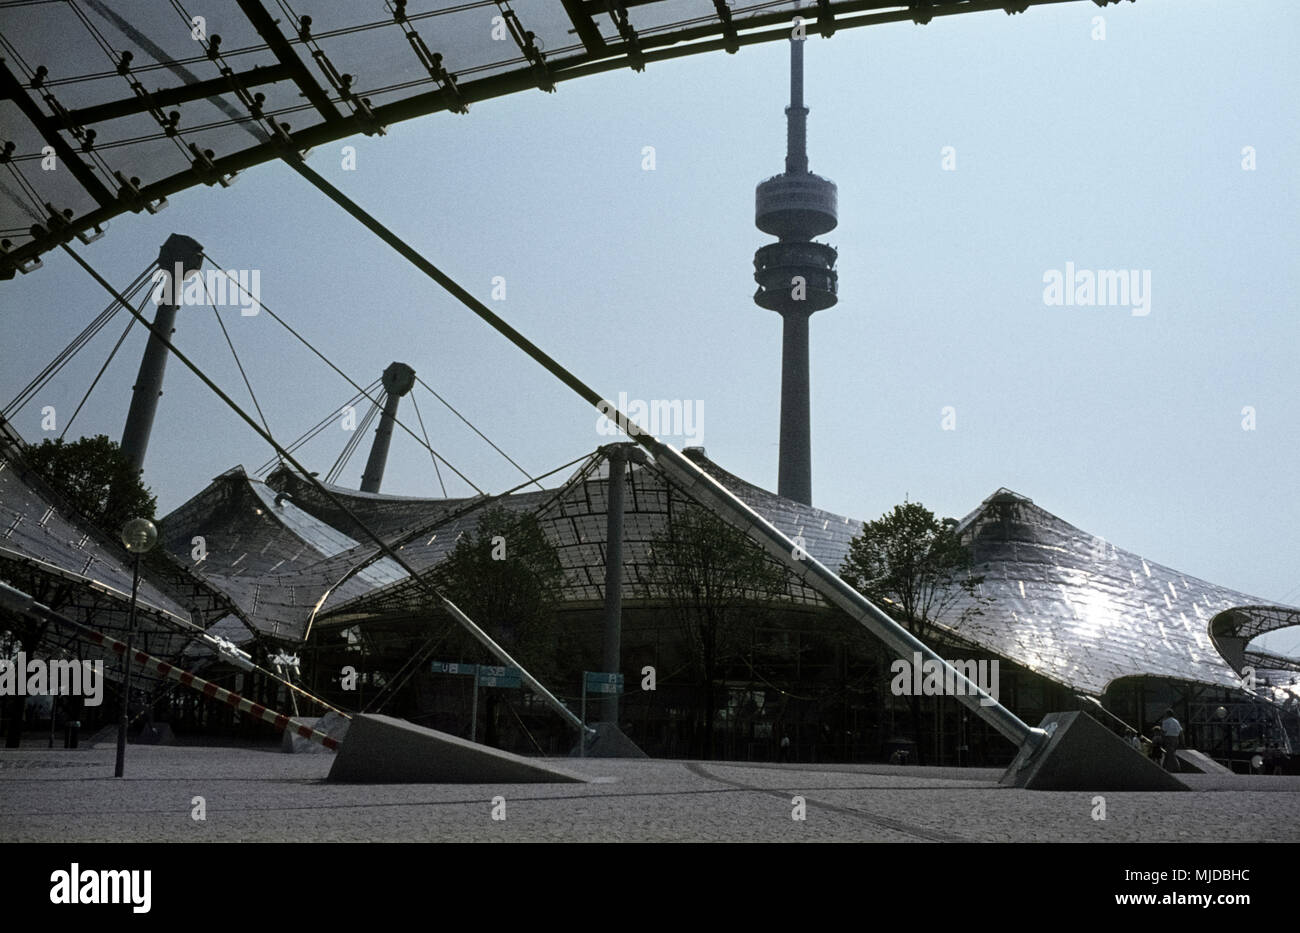 Der Münchner Olympiapark kurz vor der Fertigstellung. The Olympic Park of Munich under construction. The Olympiapark just before completion in 1972 Stock Photo